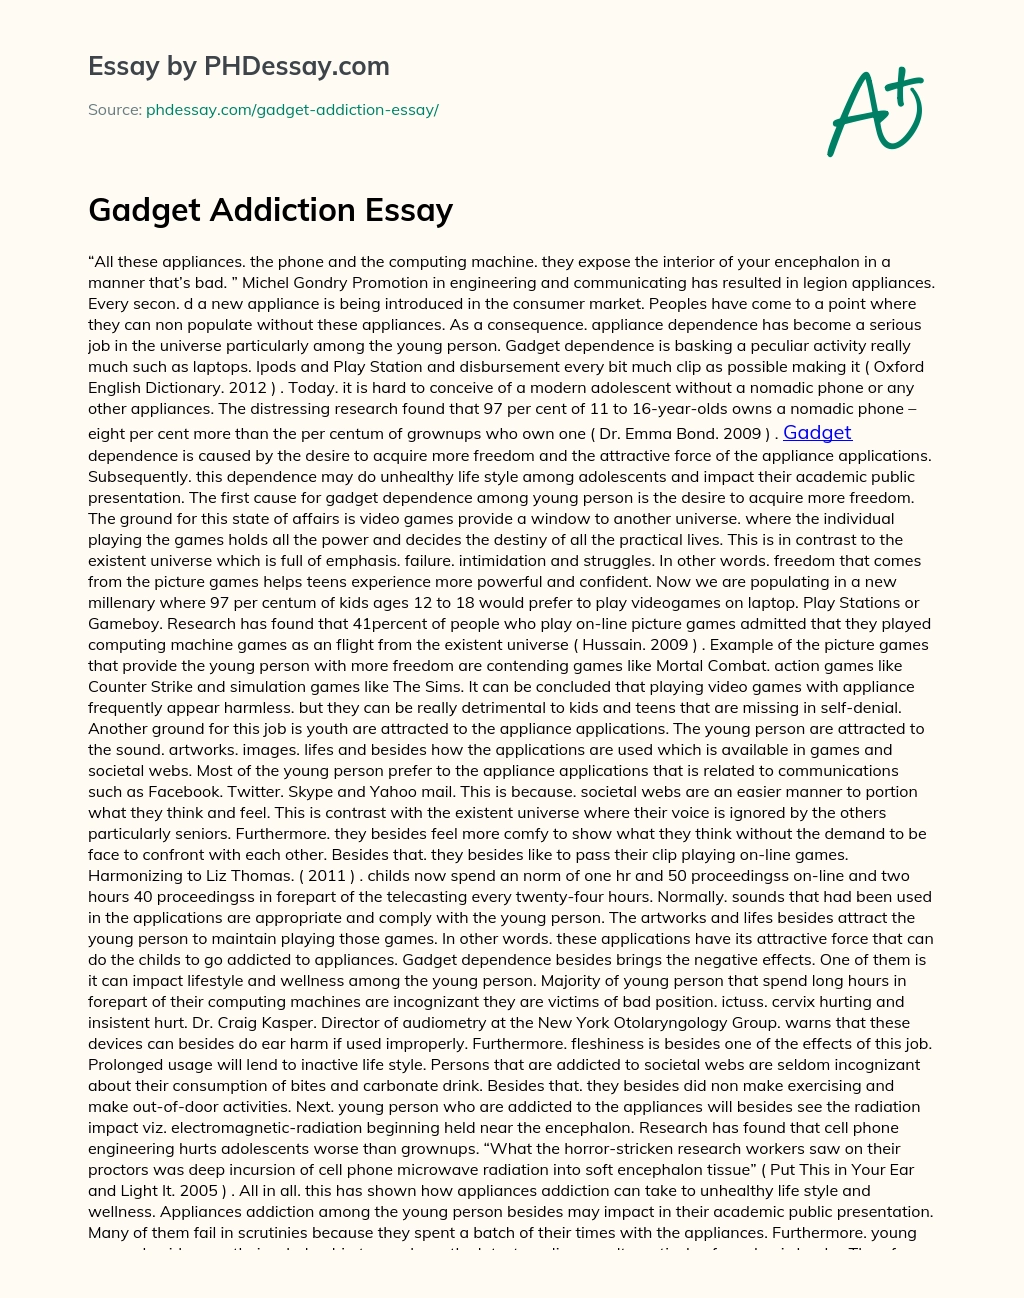 Gadget Addiction Essay essay